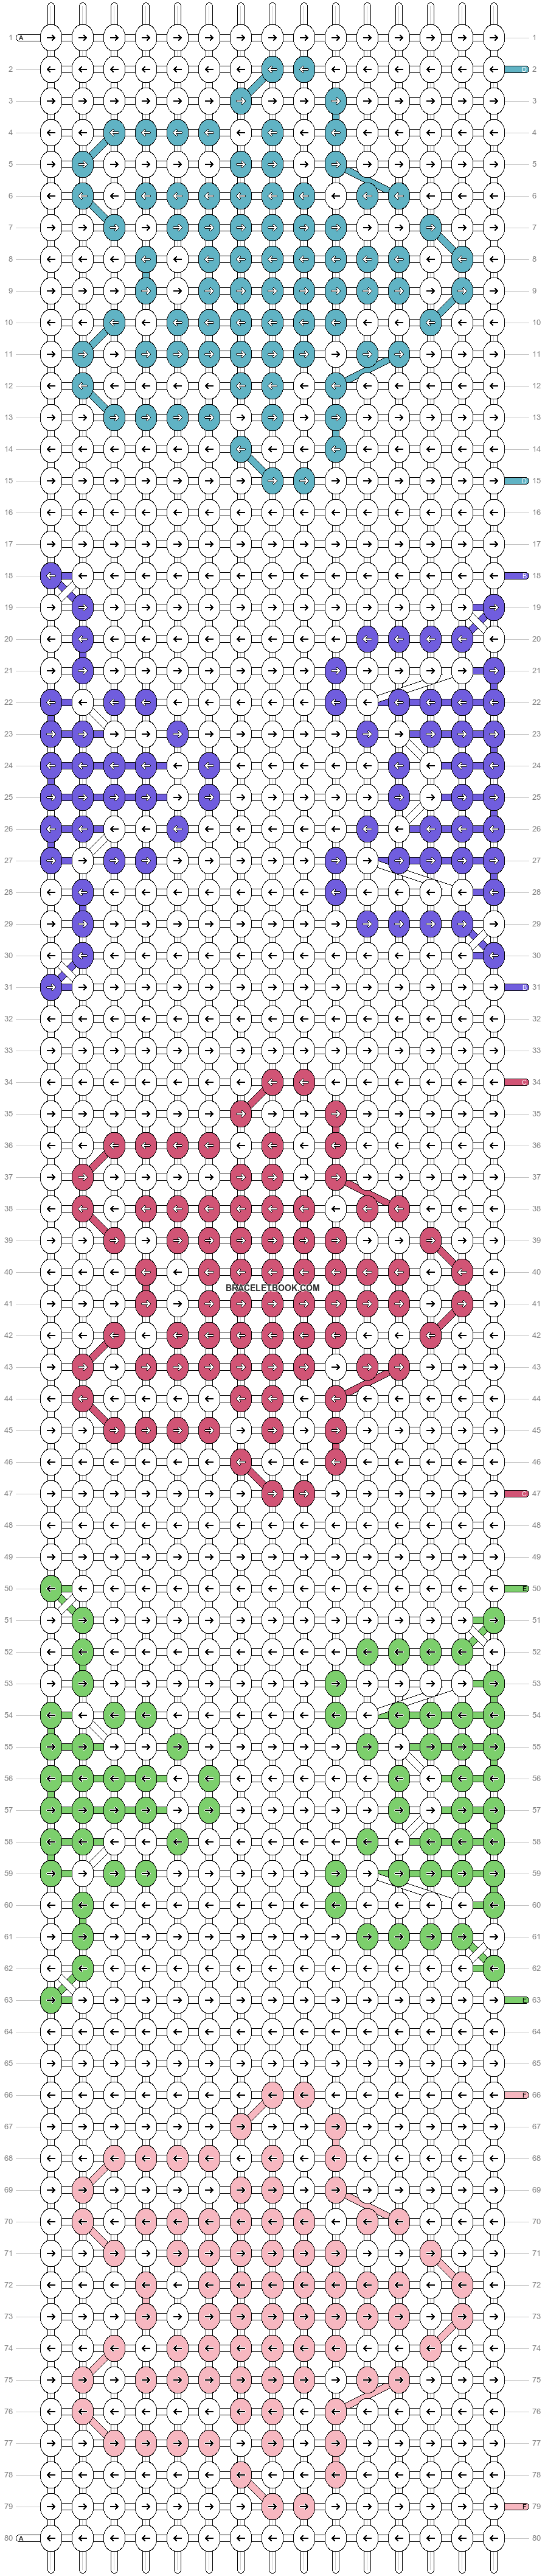 Alpha pattern #39626 variation #84441 pattern